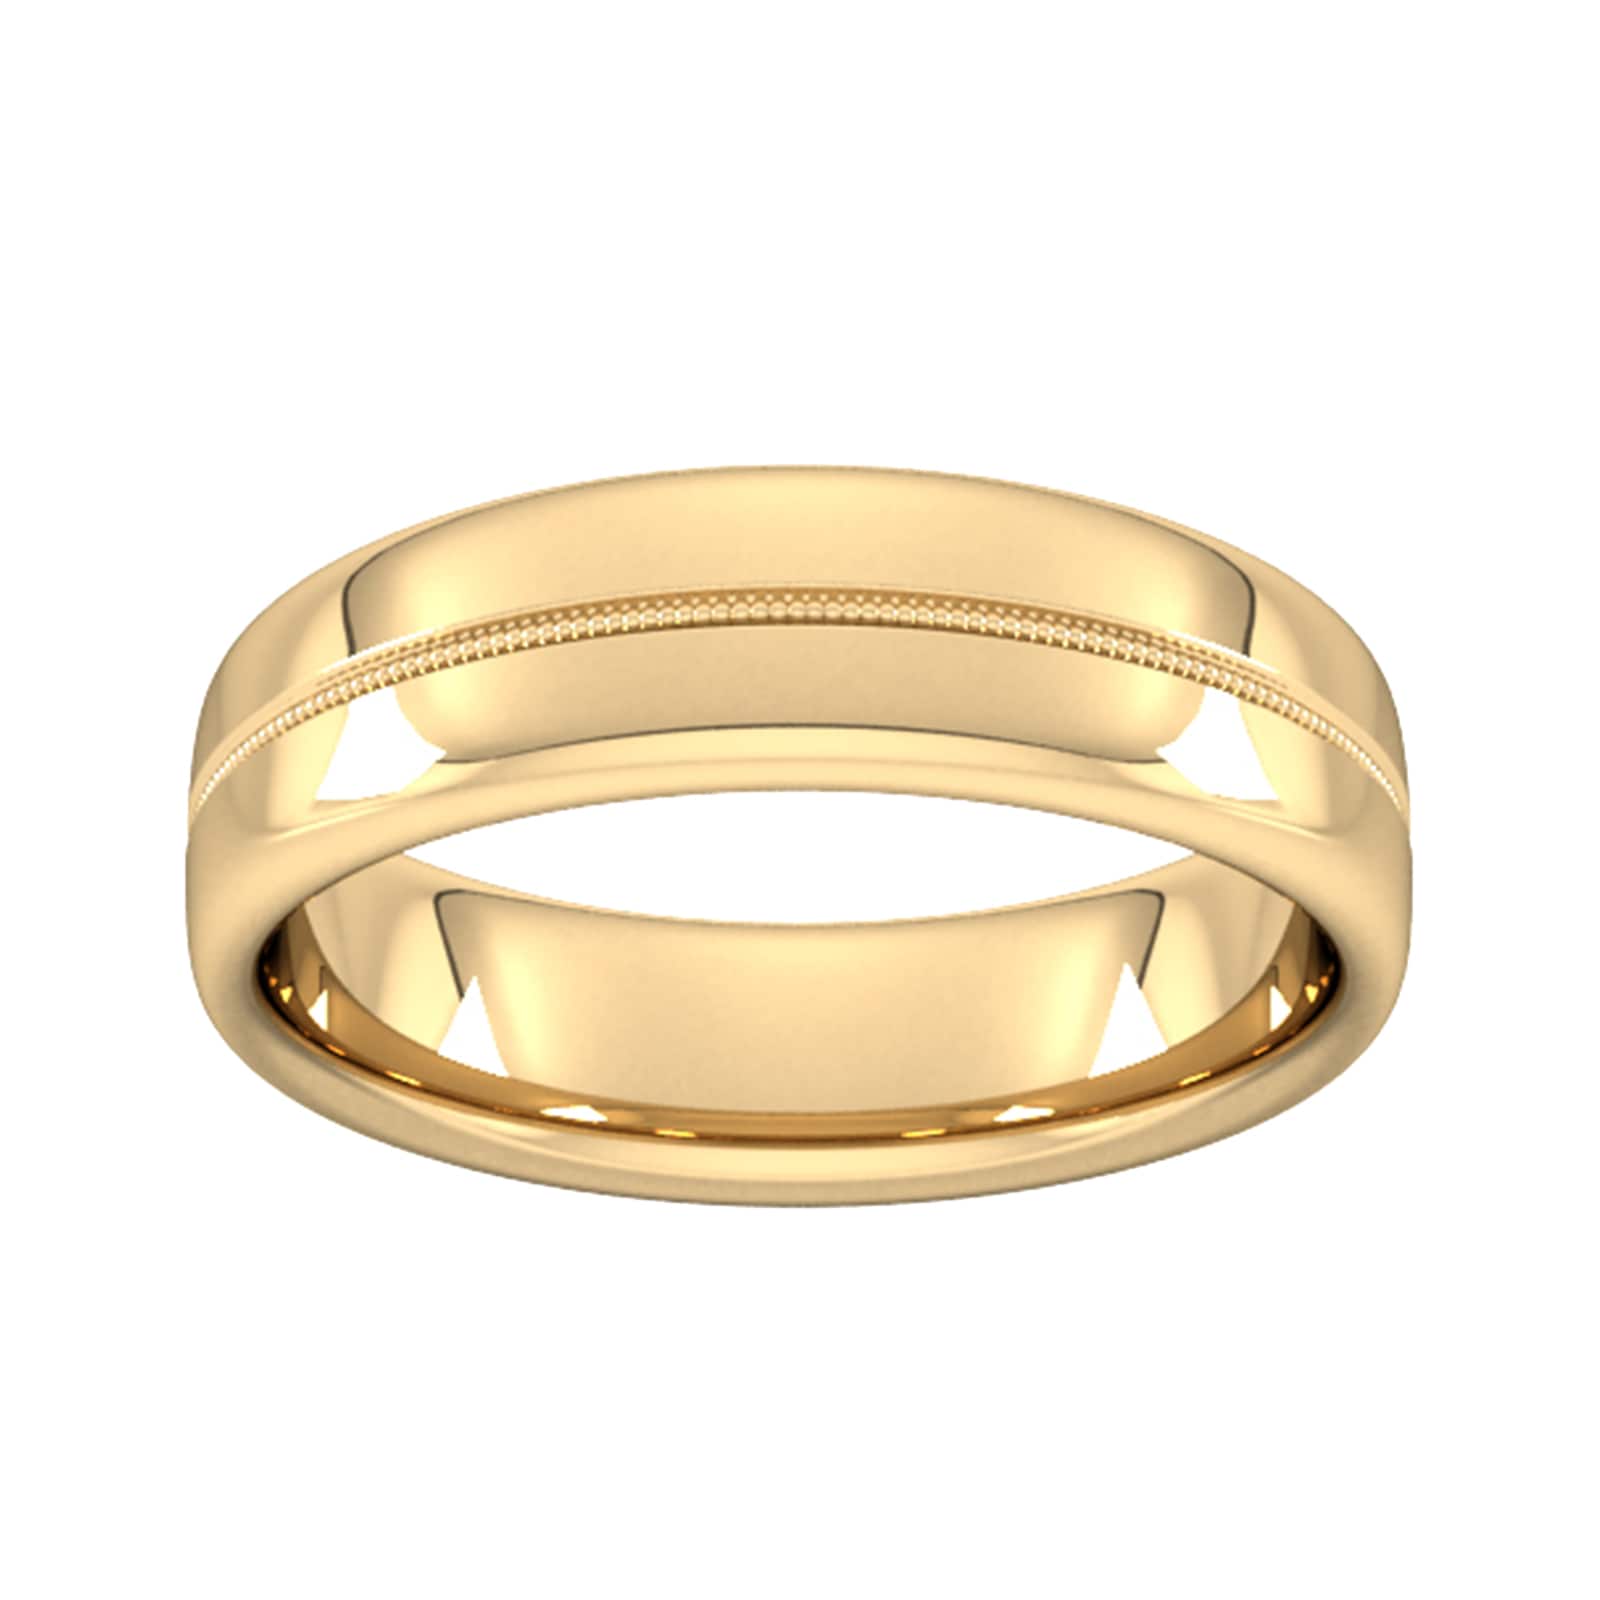 6mm Slight Court Standard Milgrain Centre Wedding Ring In 18 Carat Yellow Gold - Ring Size Q